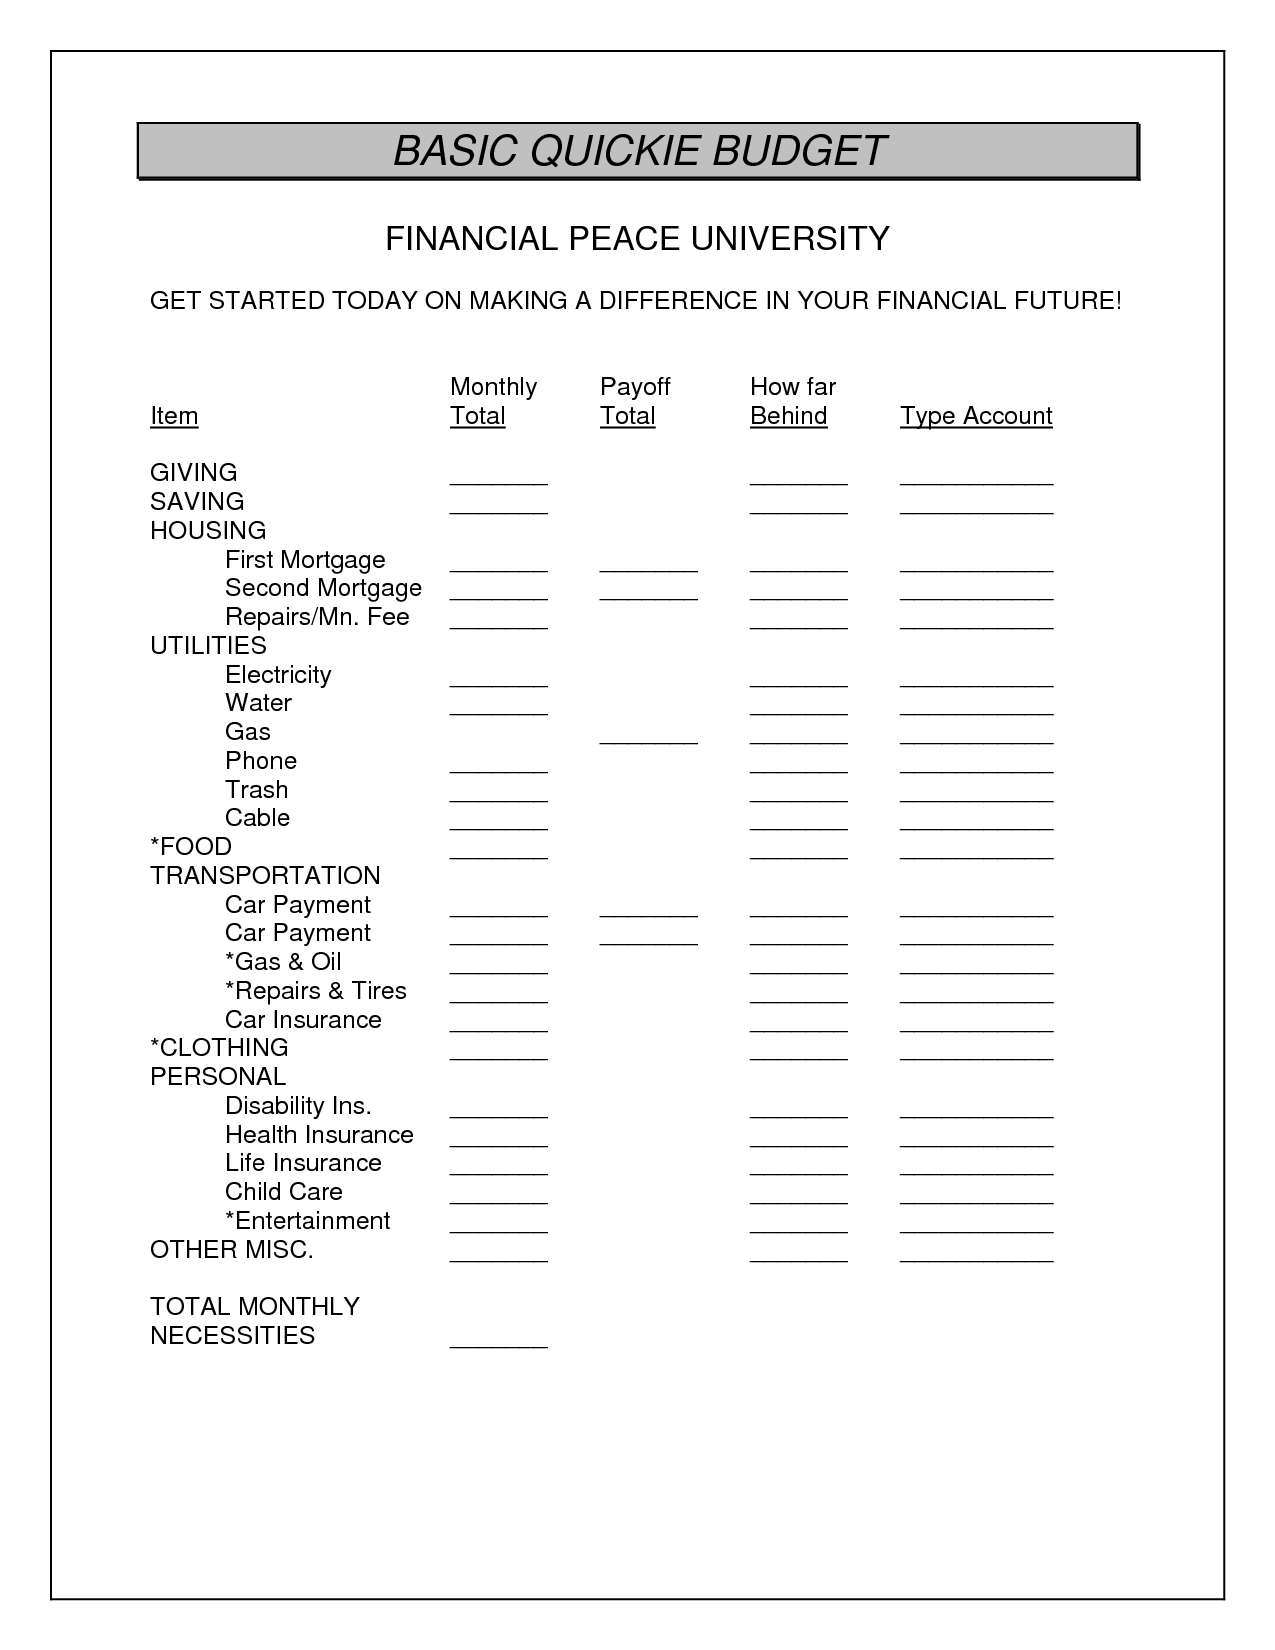 Financial Peace Budget Worksheet